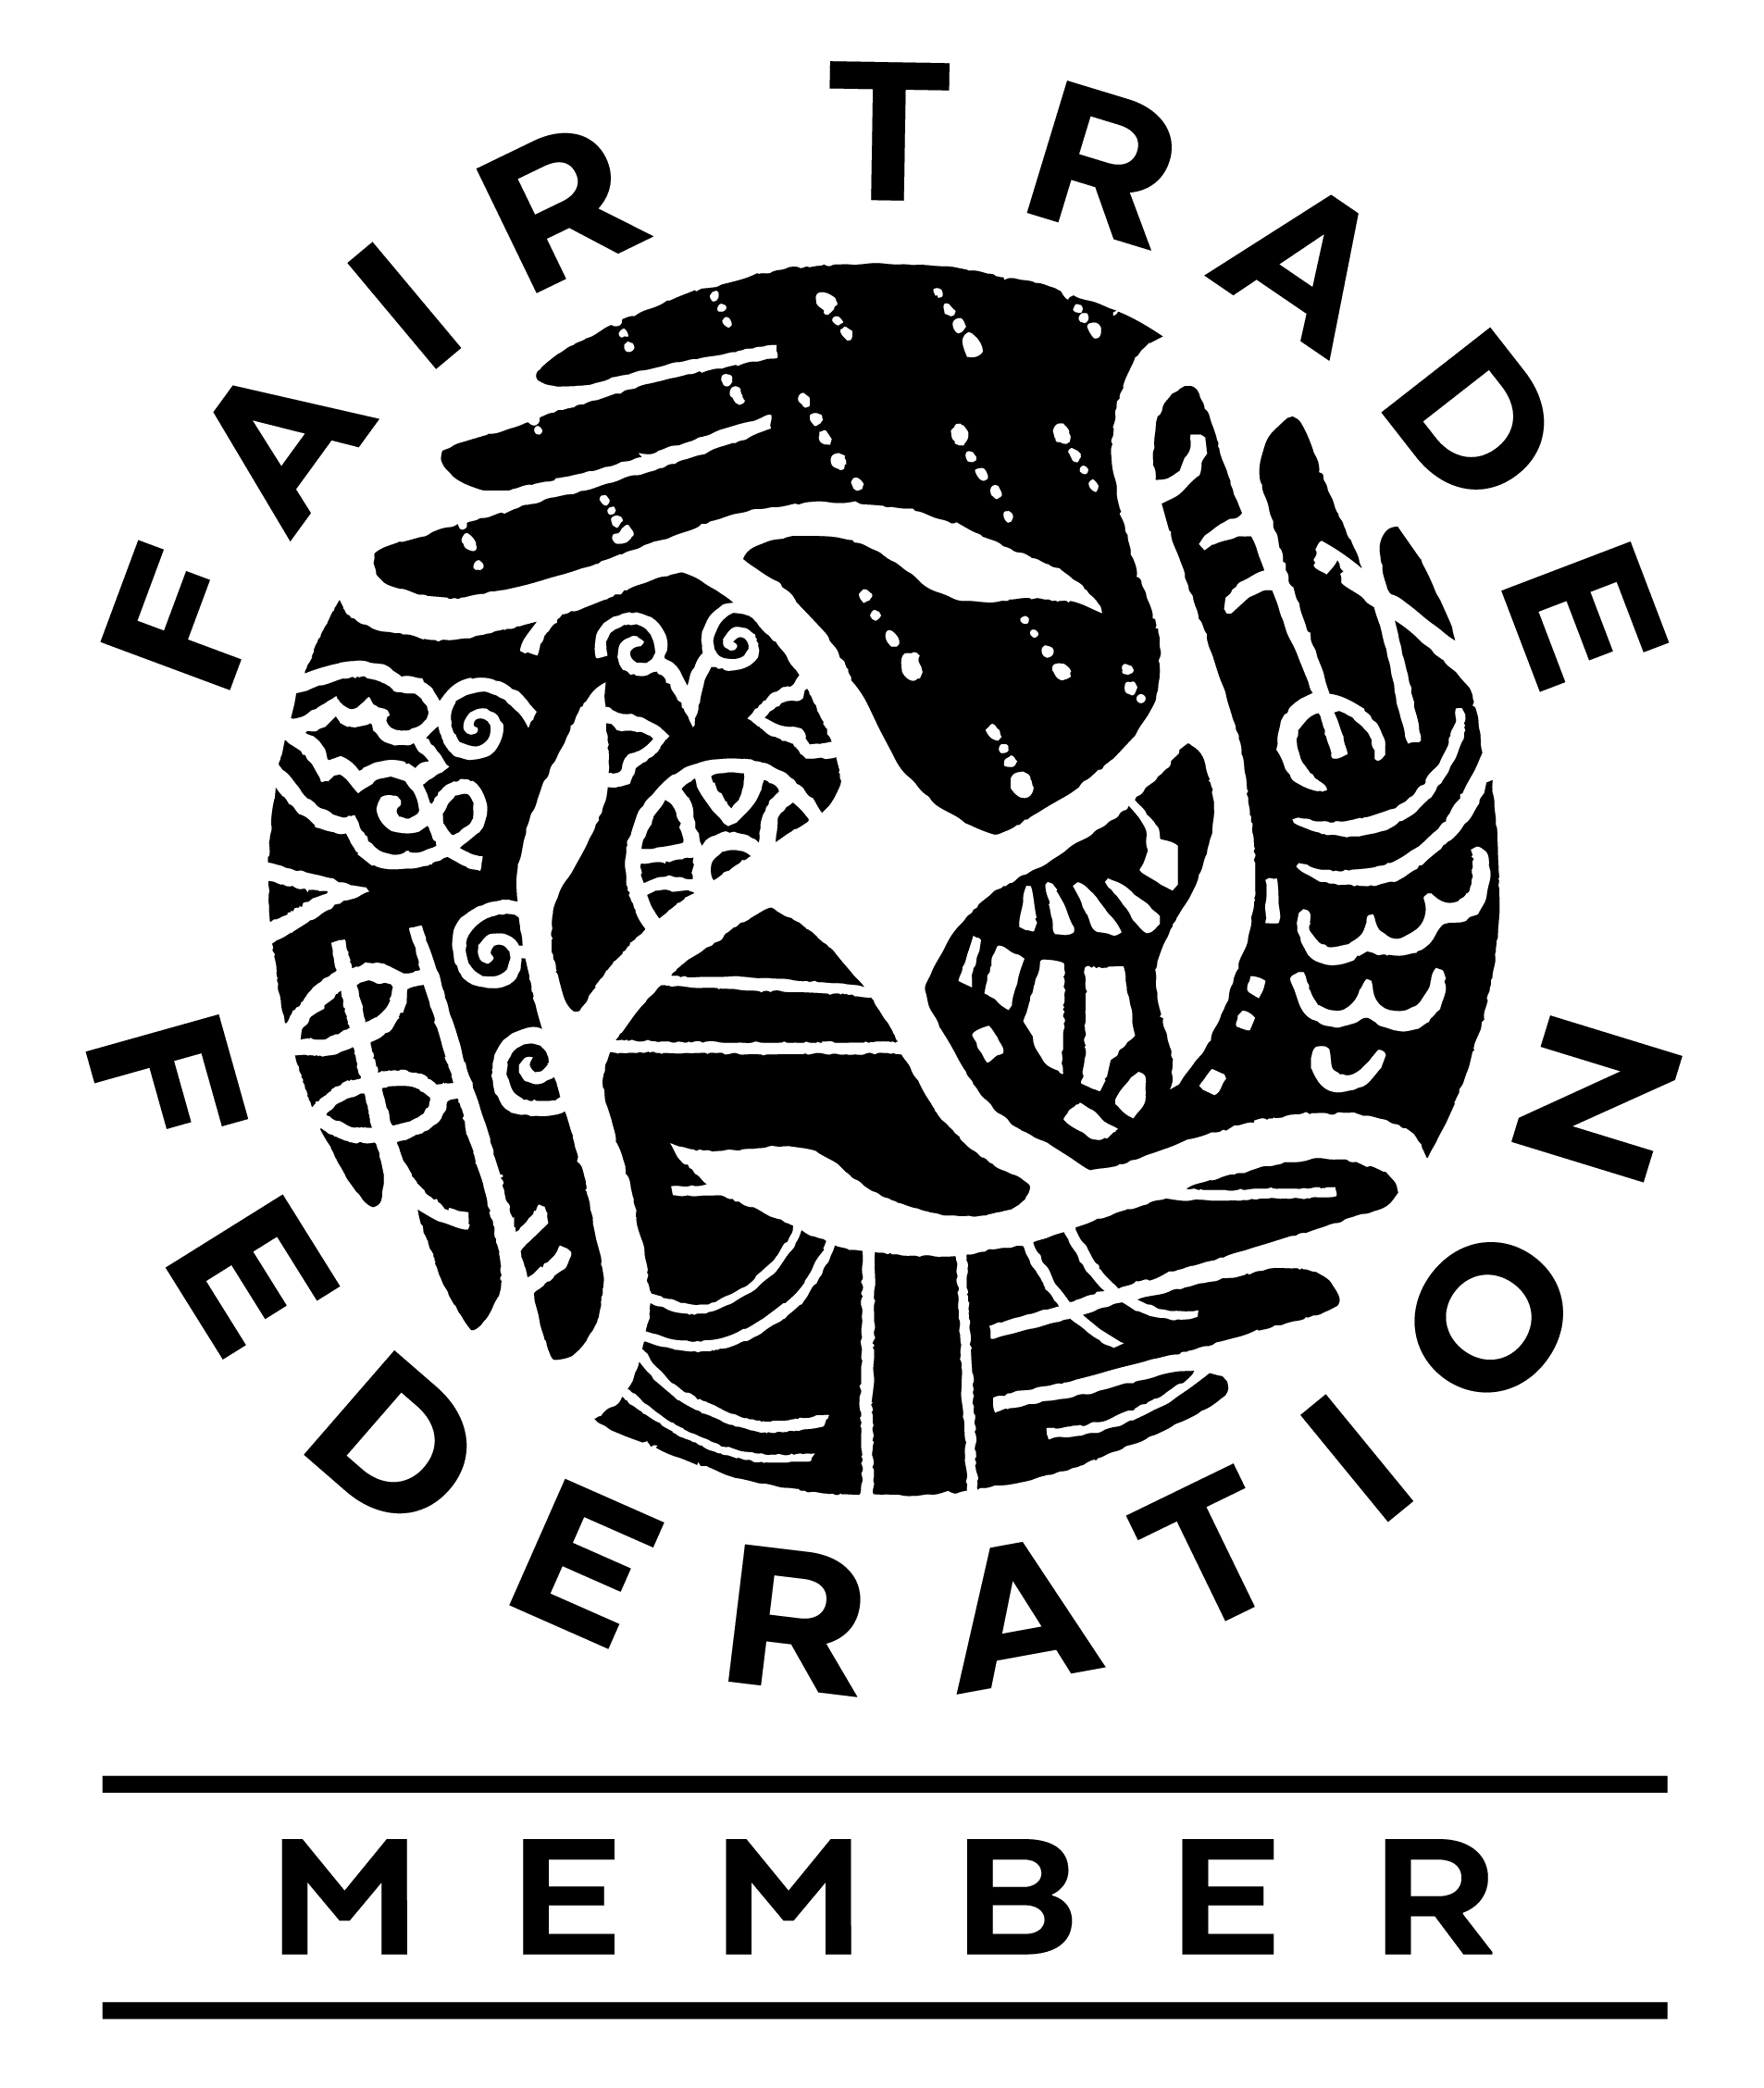 Fair Trade Federation Member